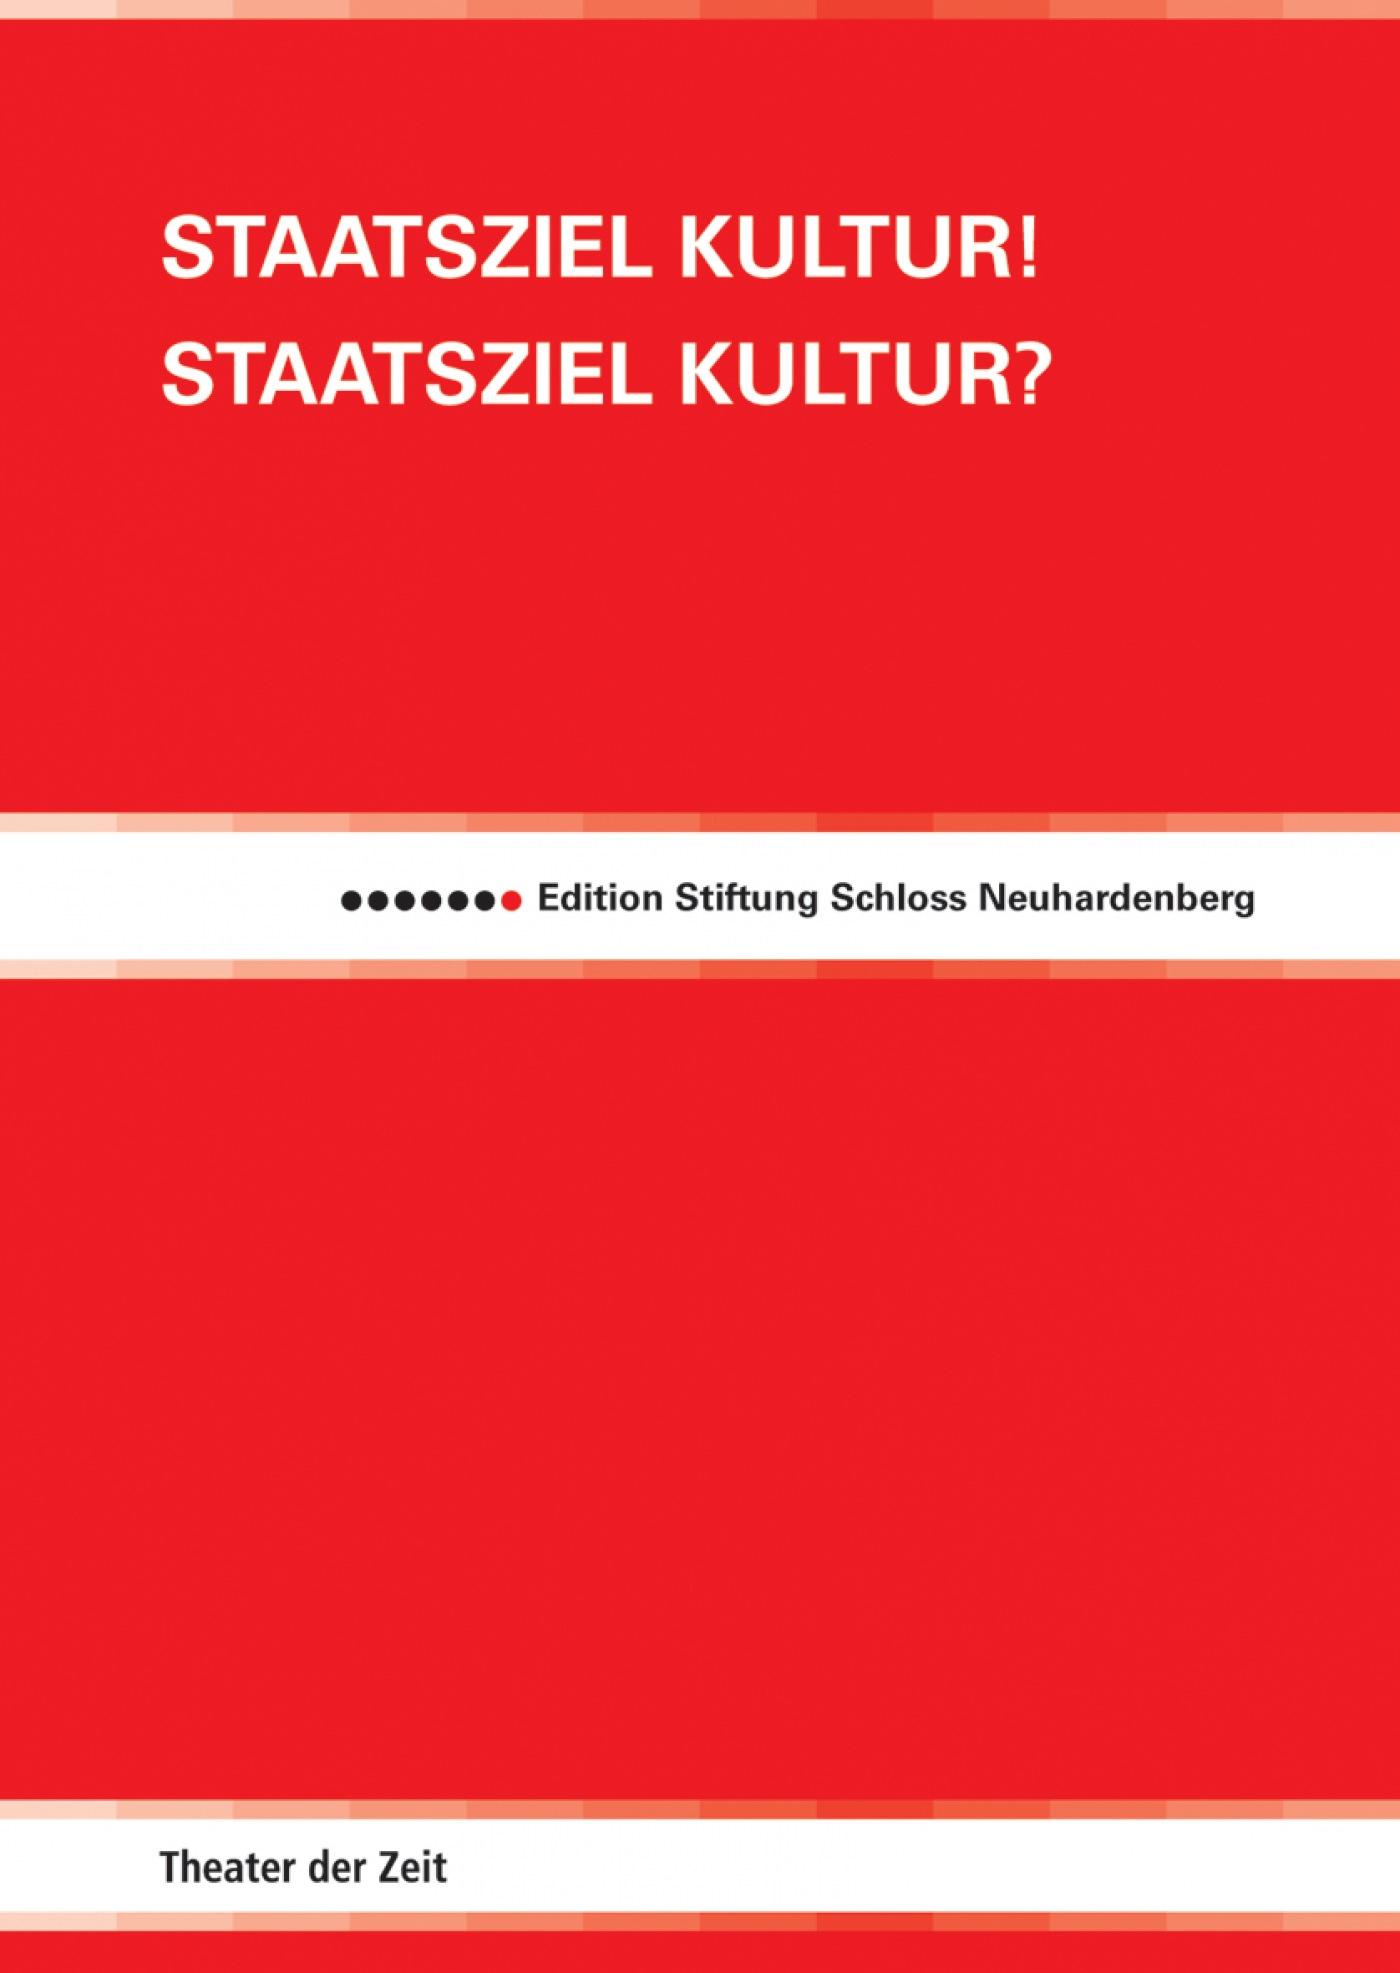 Edition Stiftung Schloss Neuhardenberg 1 "Staatsziel Kultur! Staatsziel Kultur?"